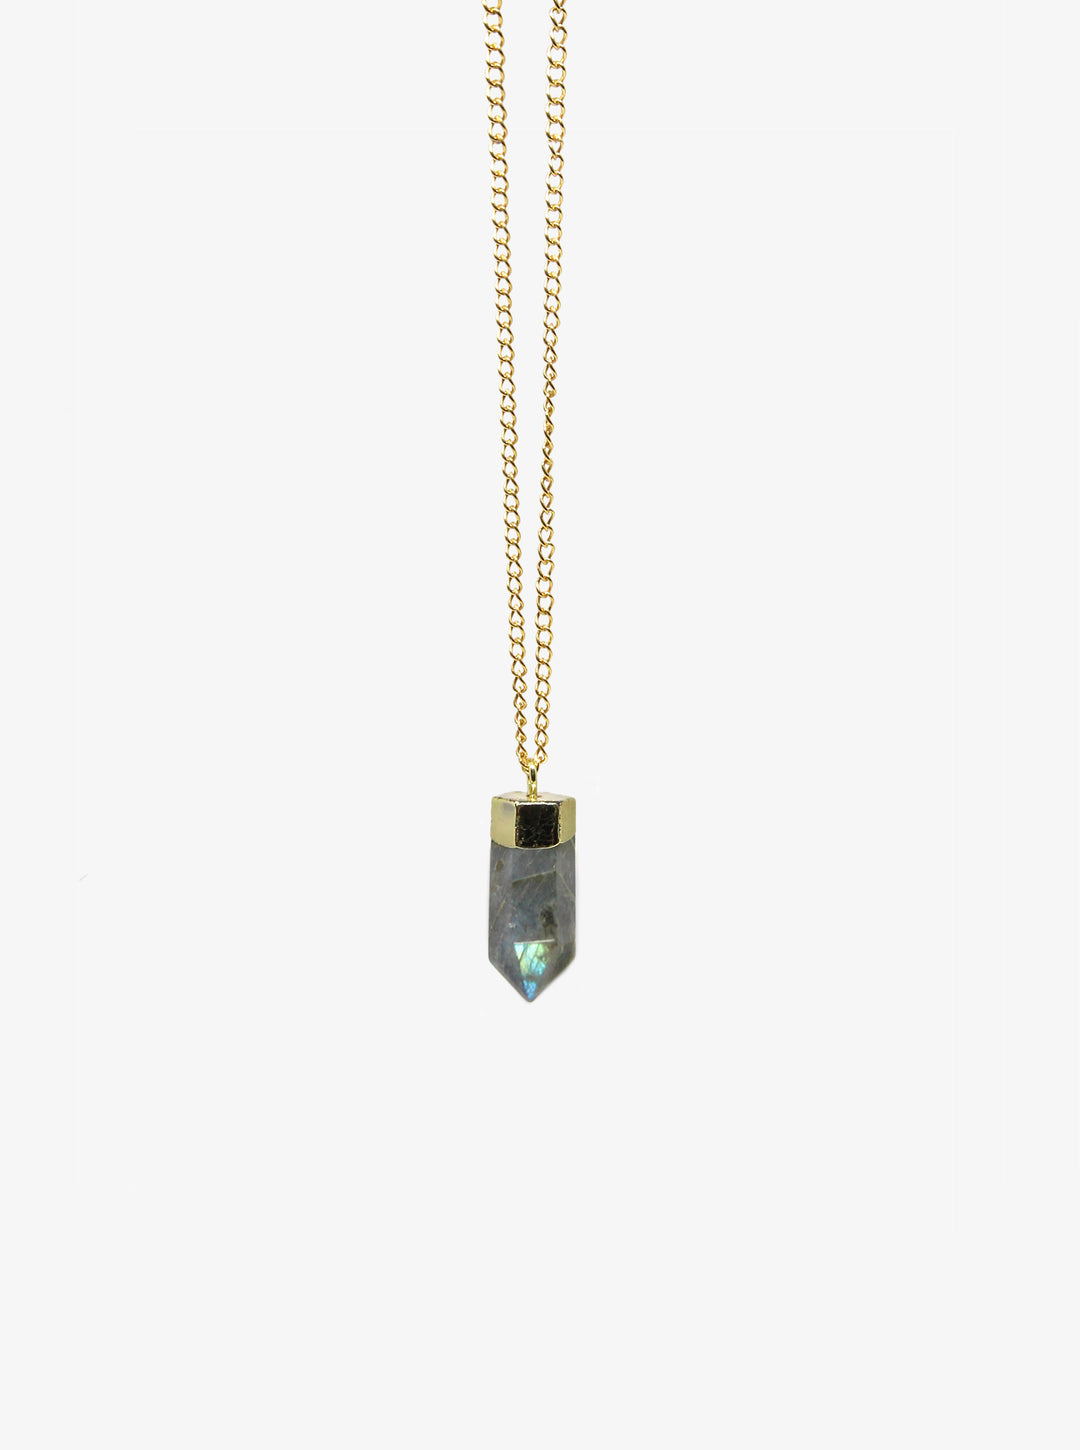 llayers-mens-women-jewelry-stone-labradorite-point-gold-pendant-newyork-brooklyn-F1